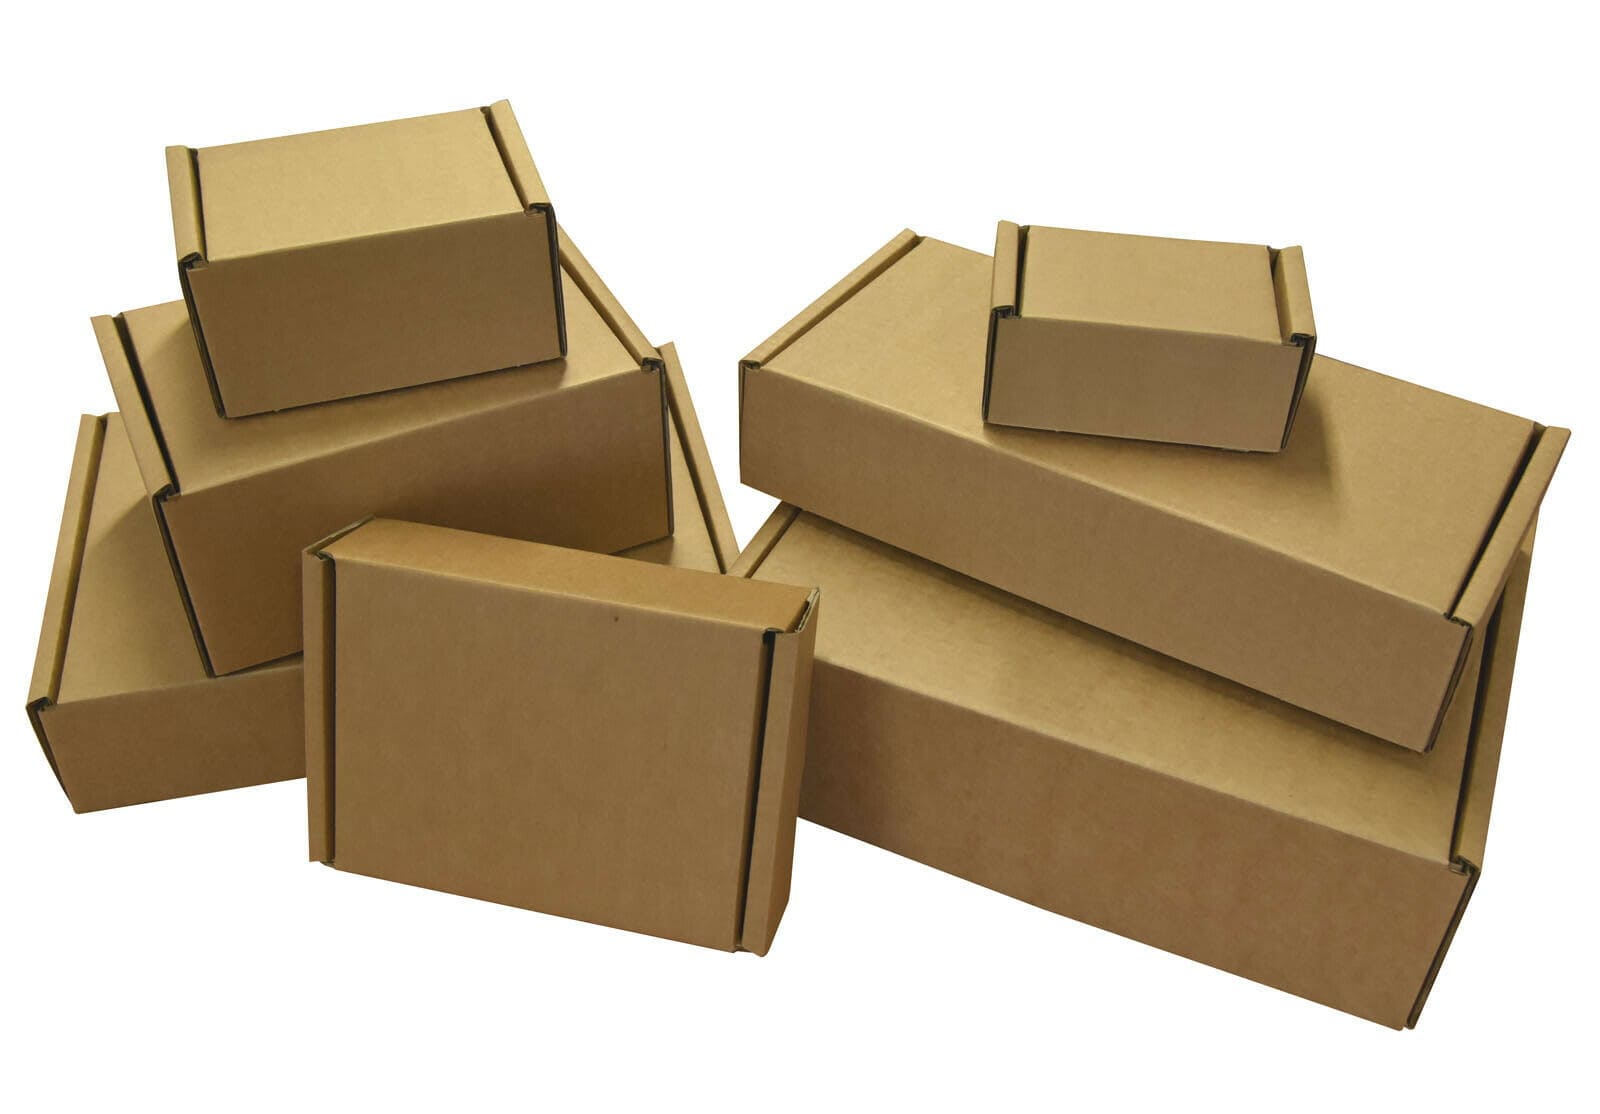 Box. Почтовые картонные коробки. Коробка посылка. Картонная коробка сбоку. Картонные коробки почта.